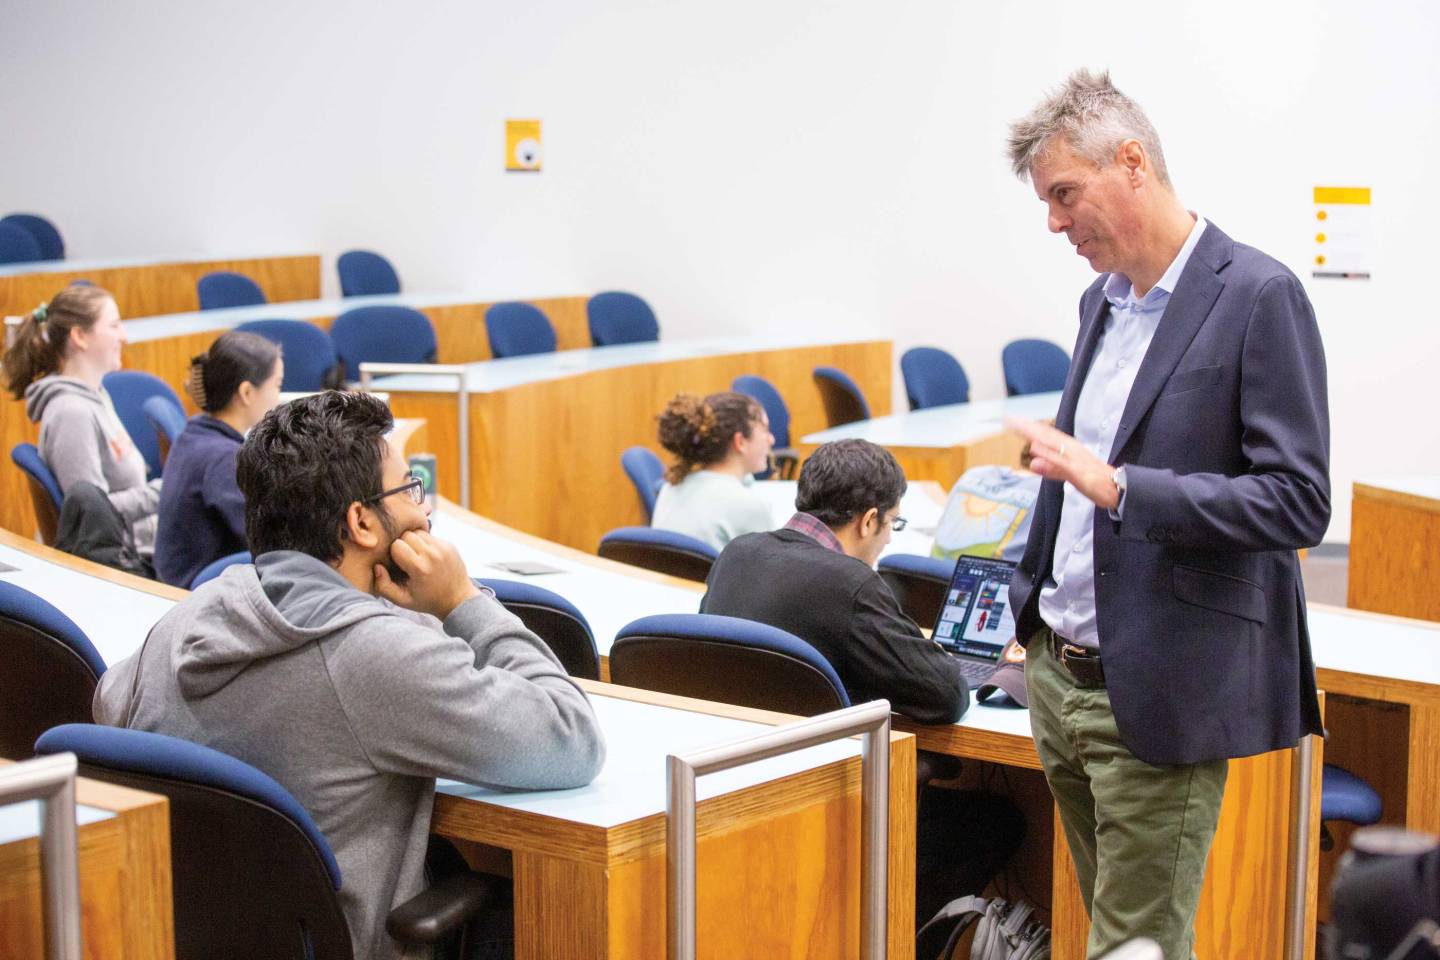 Prof Scholes talks to a student